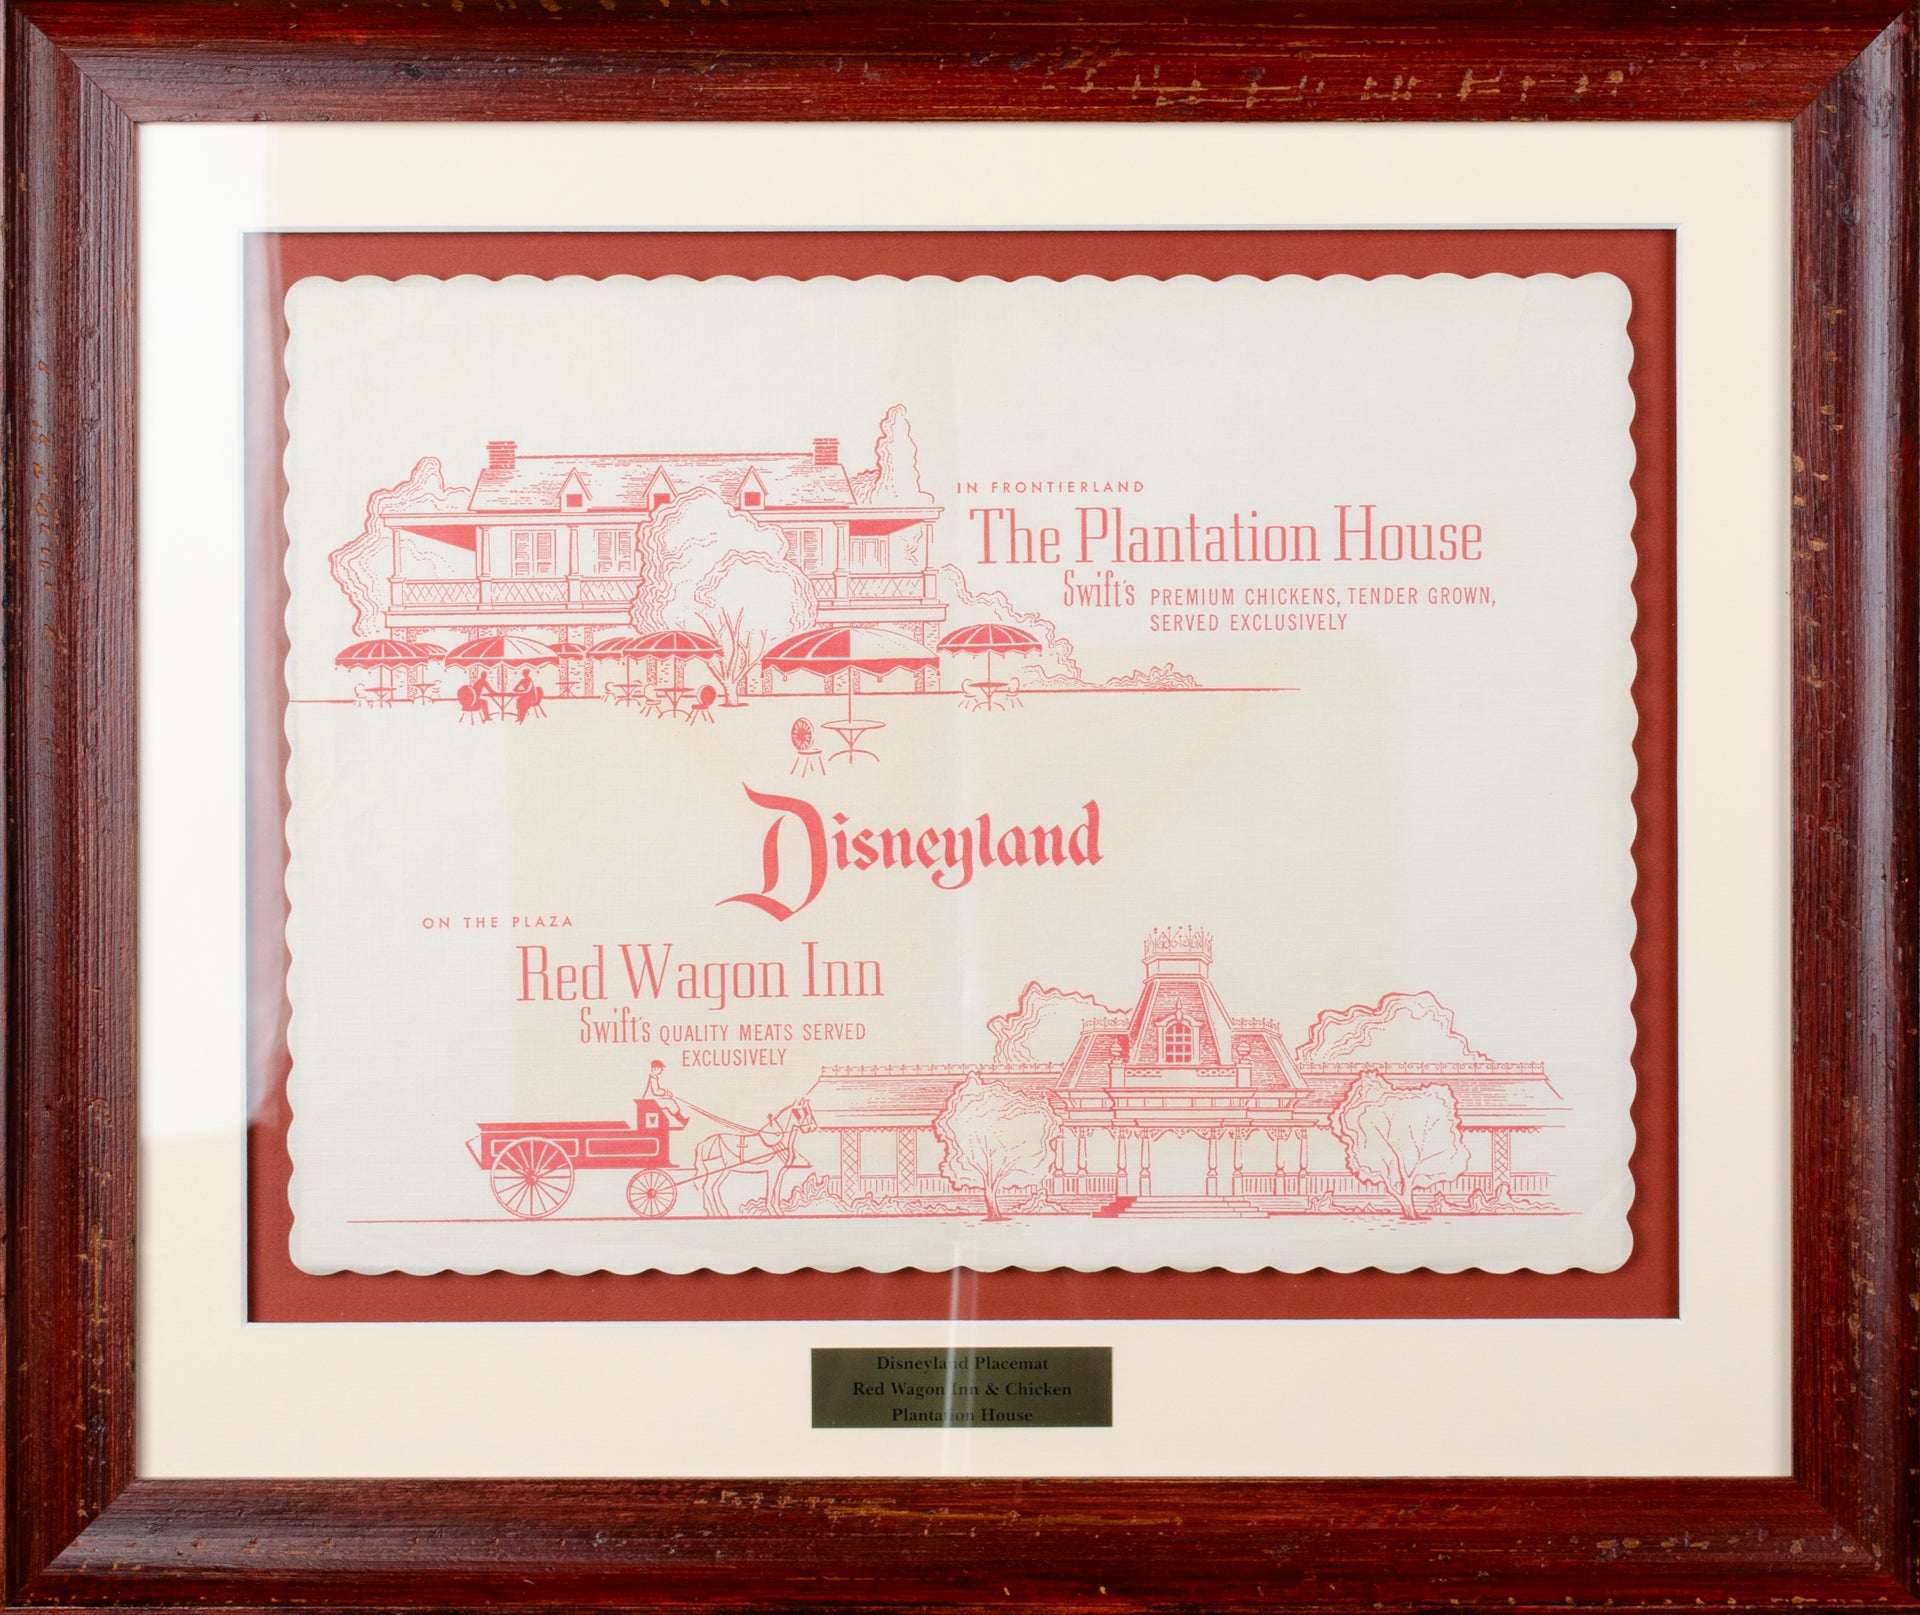 Disneyland Placemat Red Wagon Inn & Chicken Plantation House